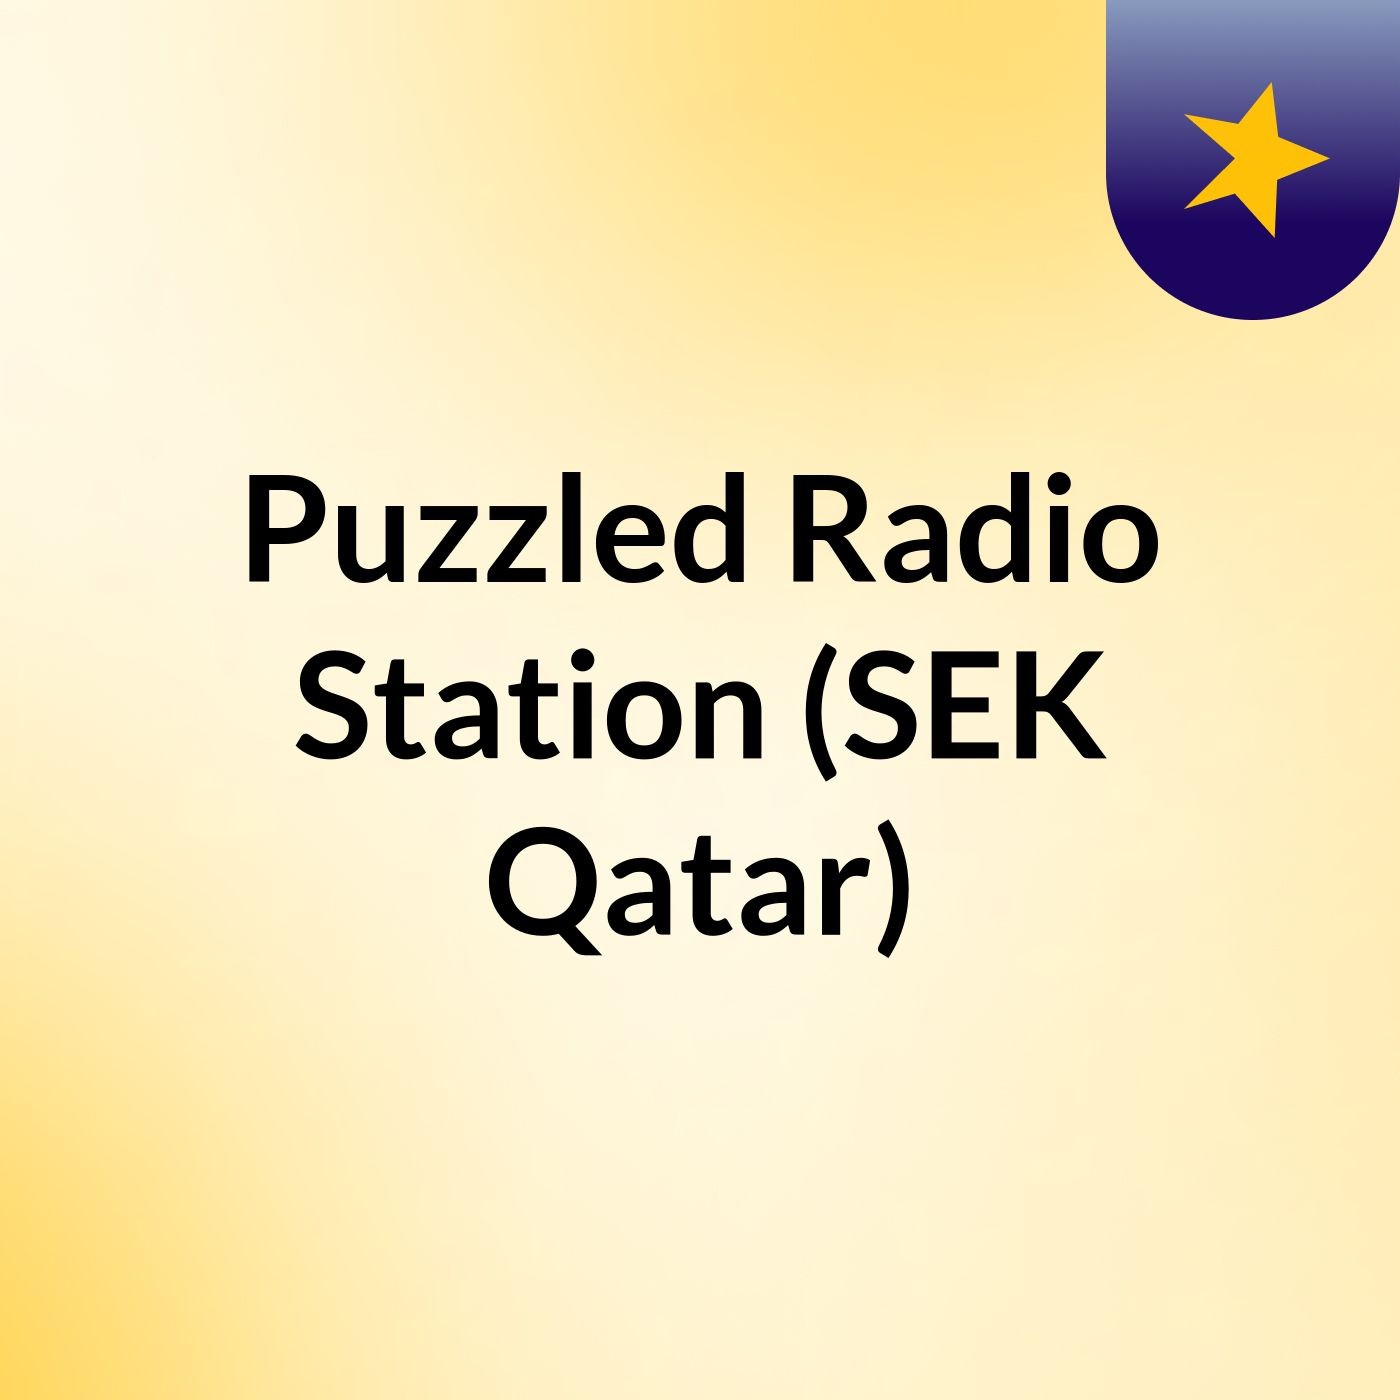 Puzzled Radio Station (SEK Qatar)